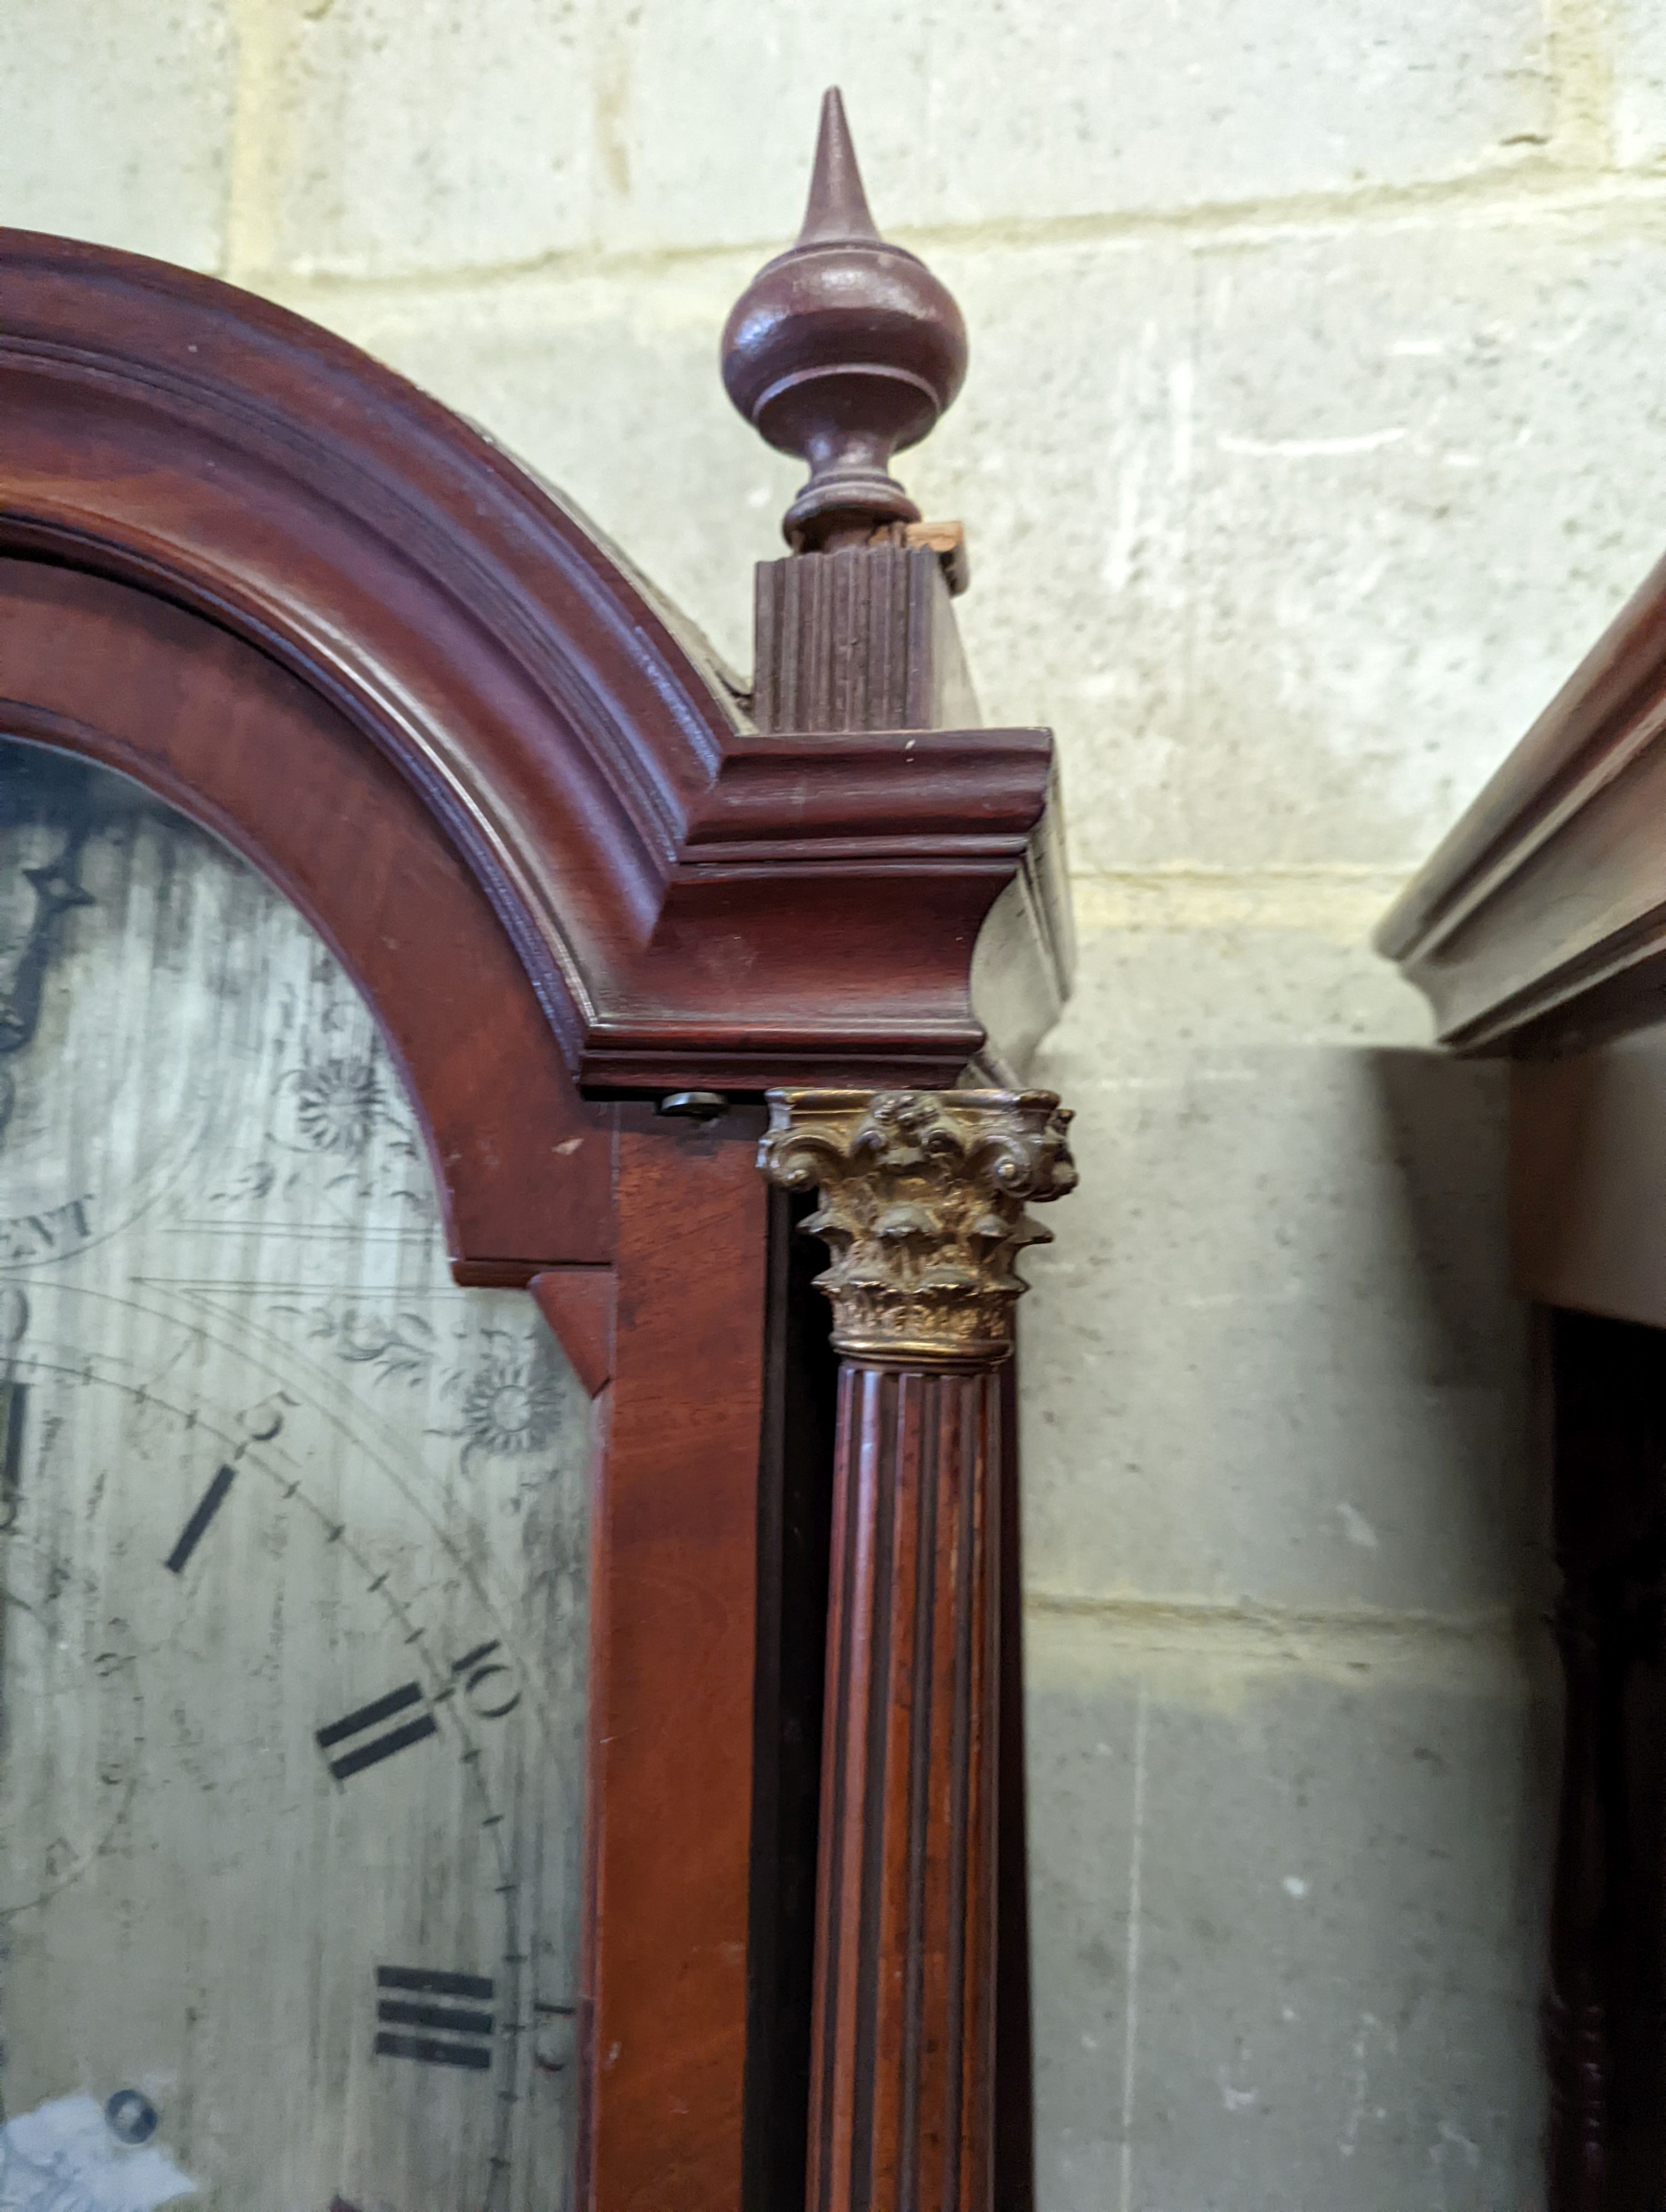 William Jordan, Chesham, Bucks. A George III inlaid mahogany 8 day longcase clock with signed silvered dial, height 216cm